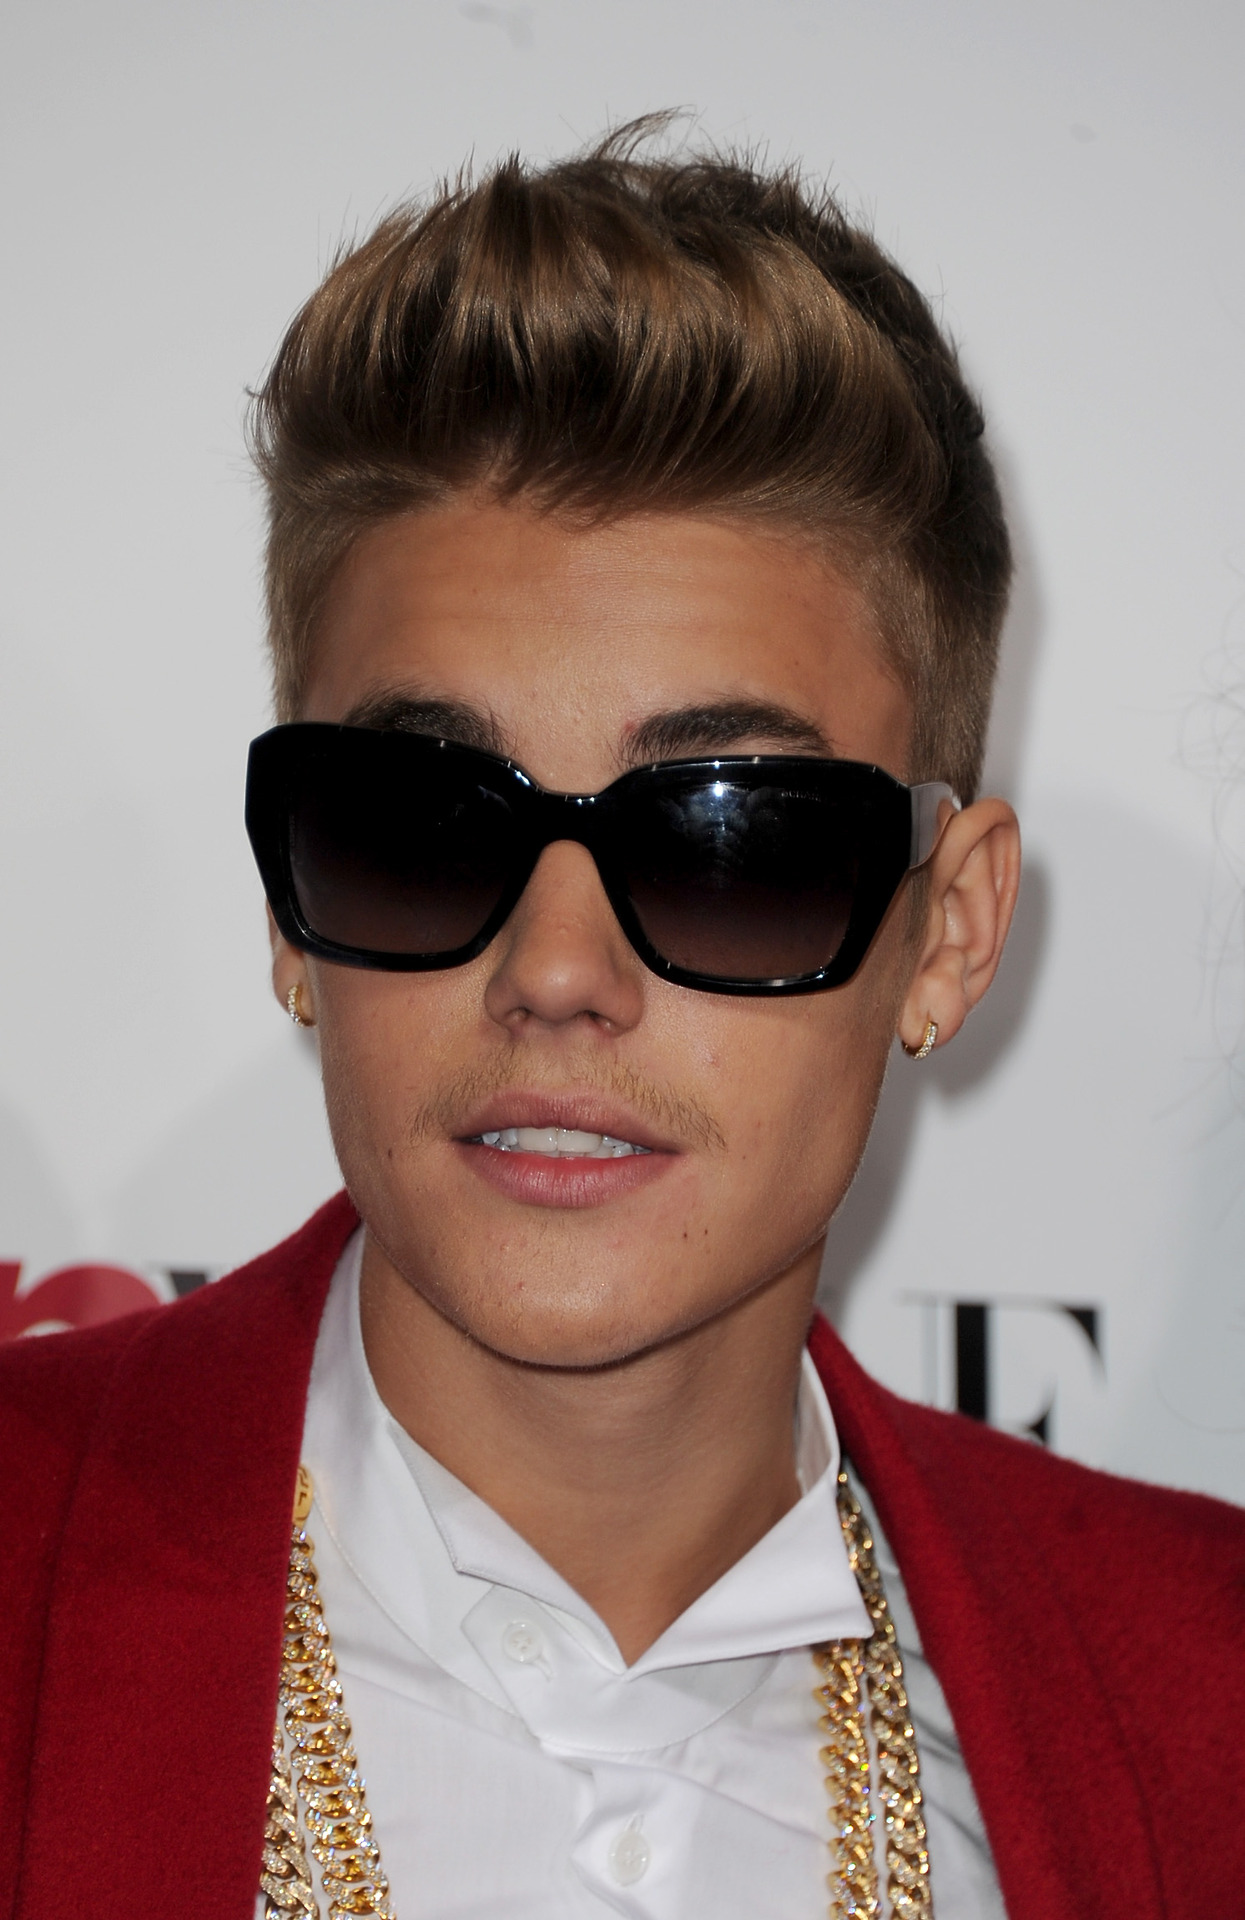 Premiere Of Open Road Films' "Justin Bieber's Believe" - Red Carpet